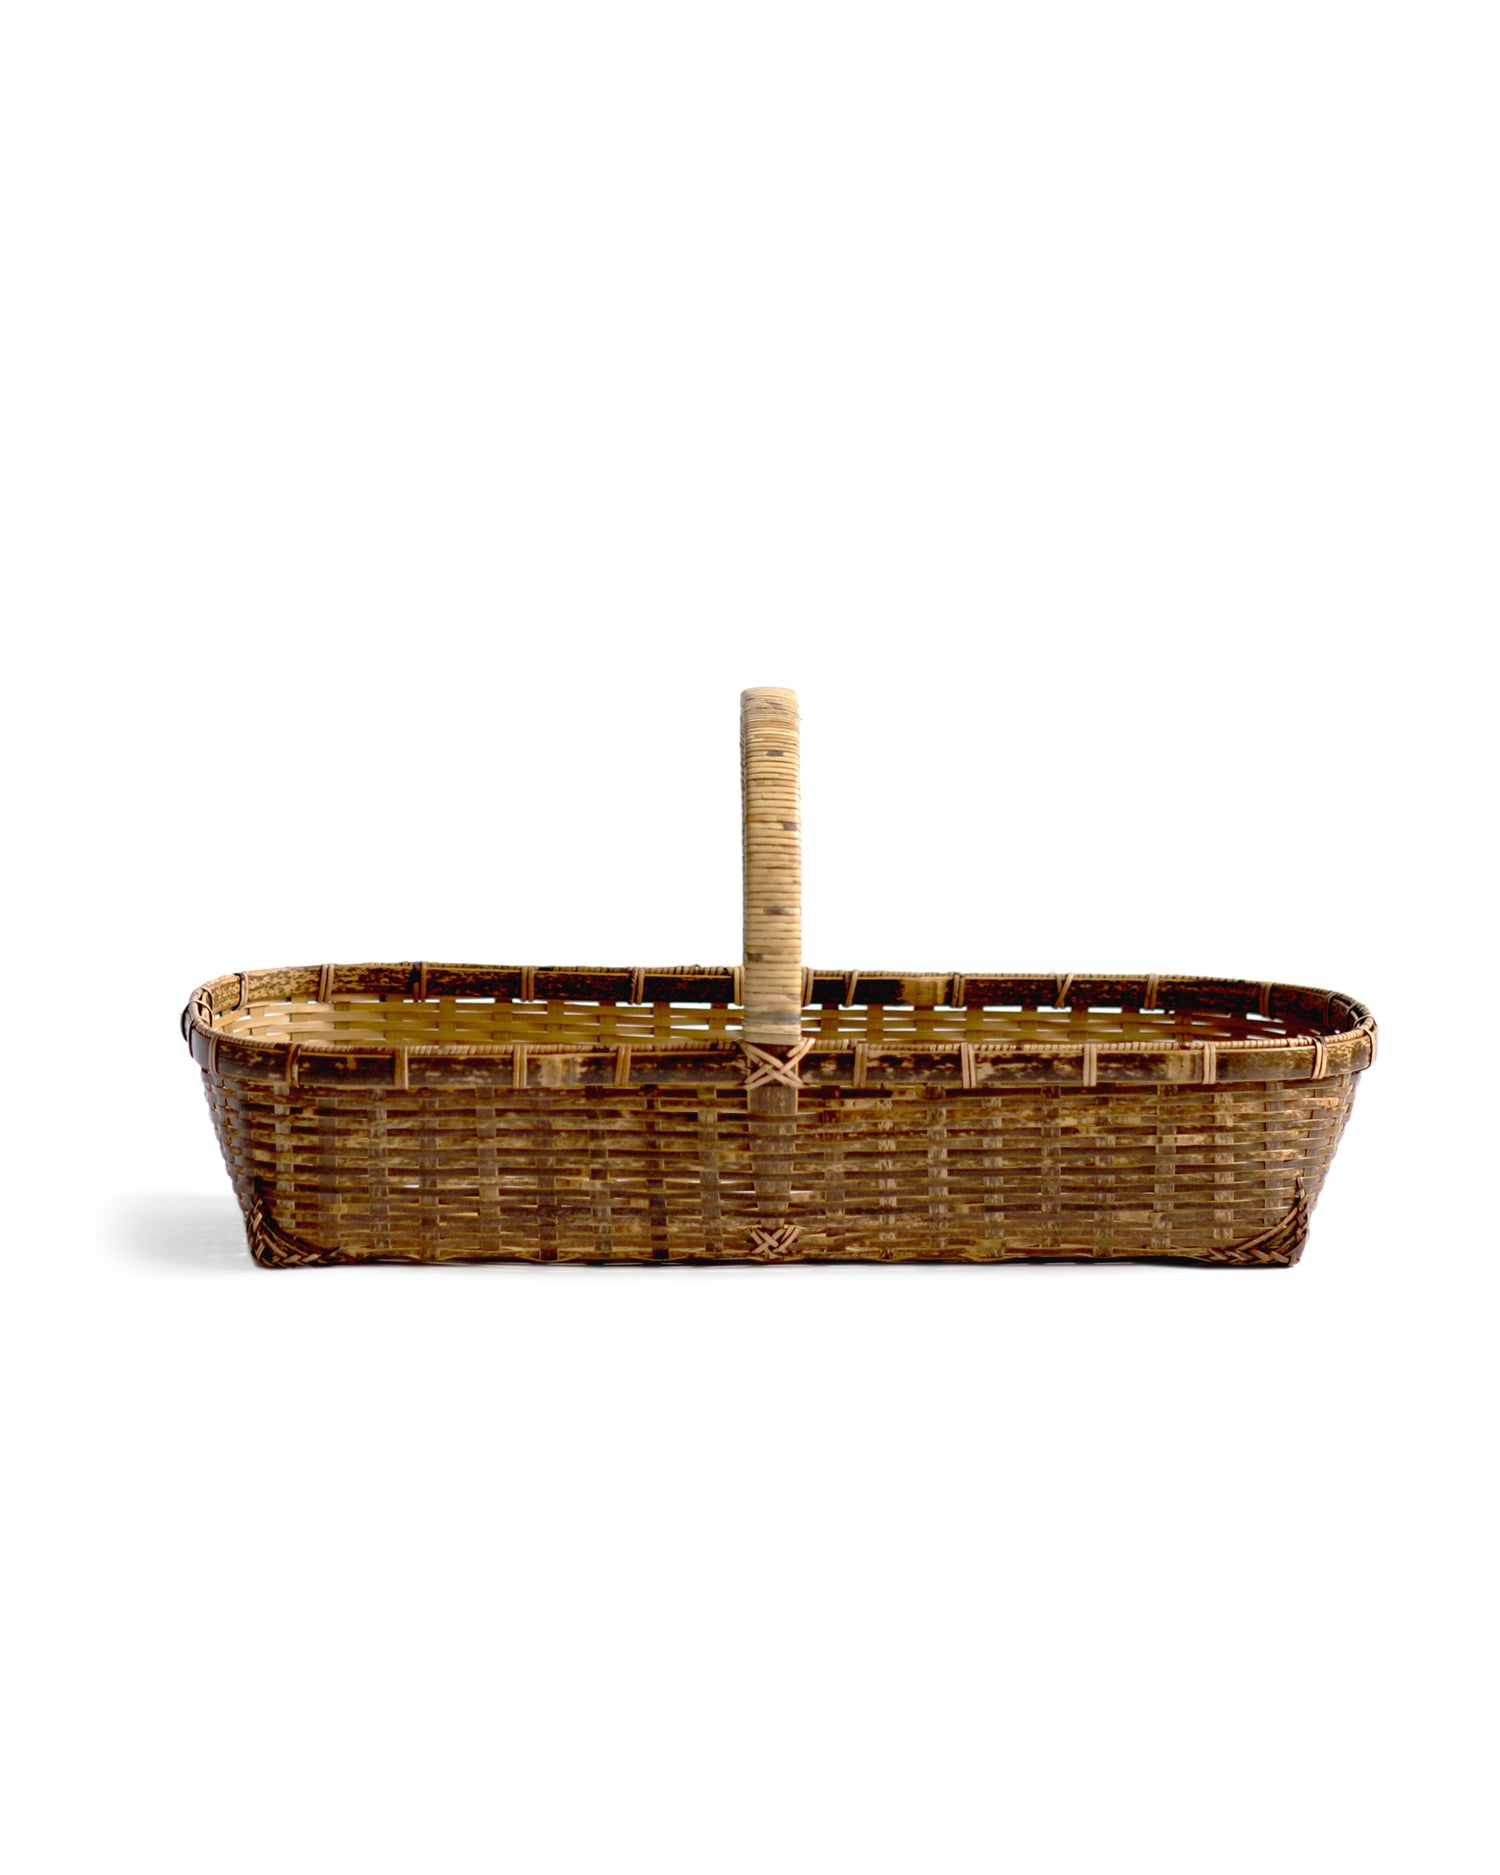 Silhouetted side image of long toradake bread basket with handle by Kohchosai Kosuga against white background.